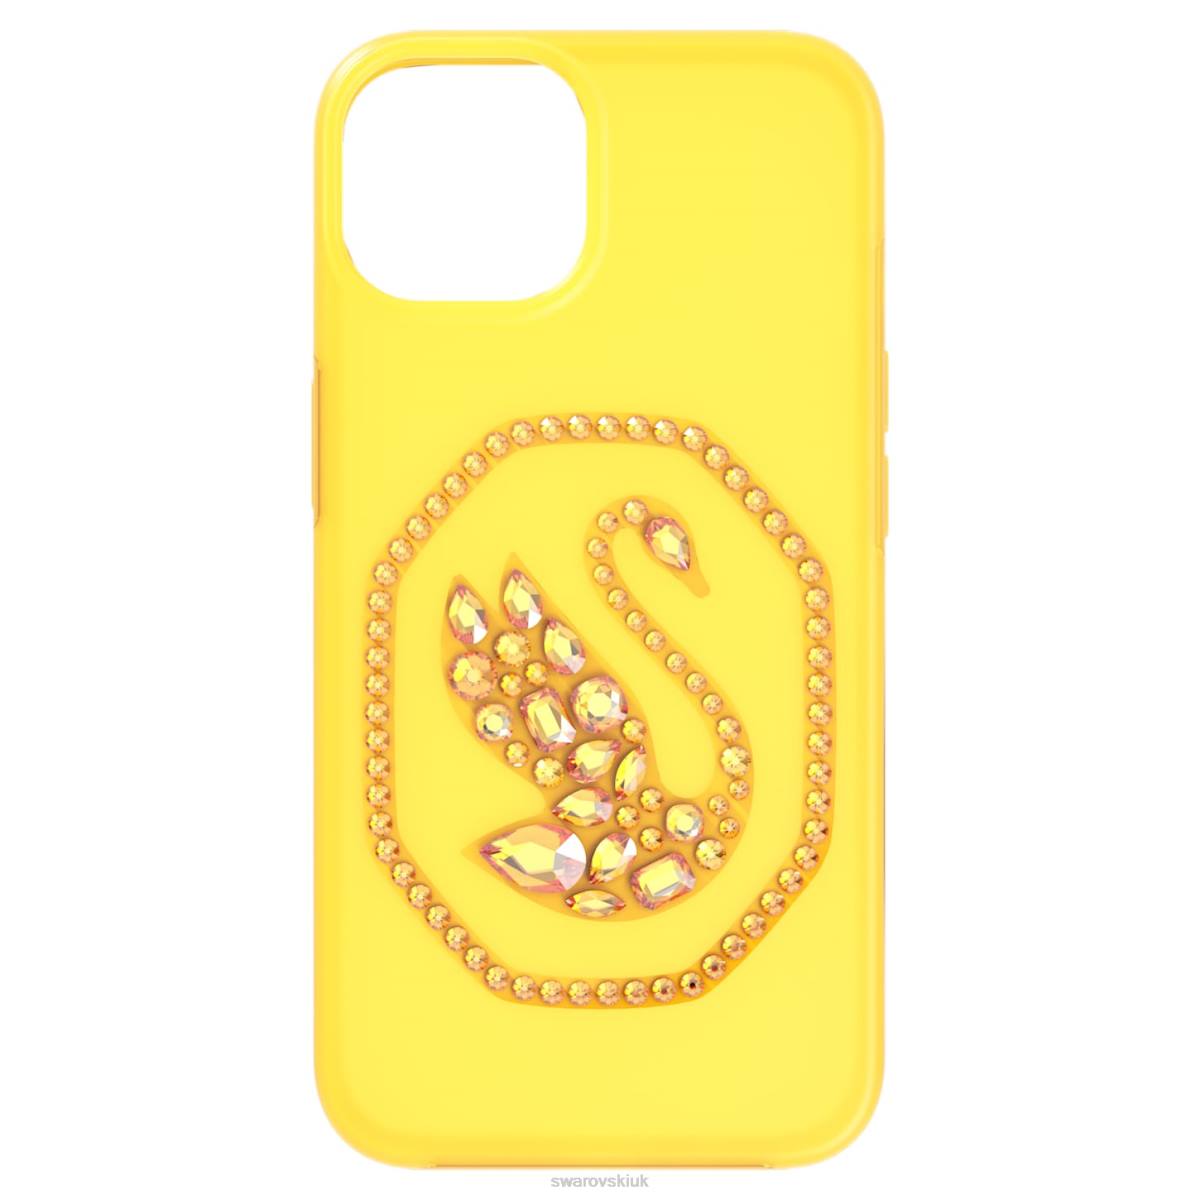 Accessories Swarovski Smartphone case Yellow 48JX1395